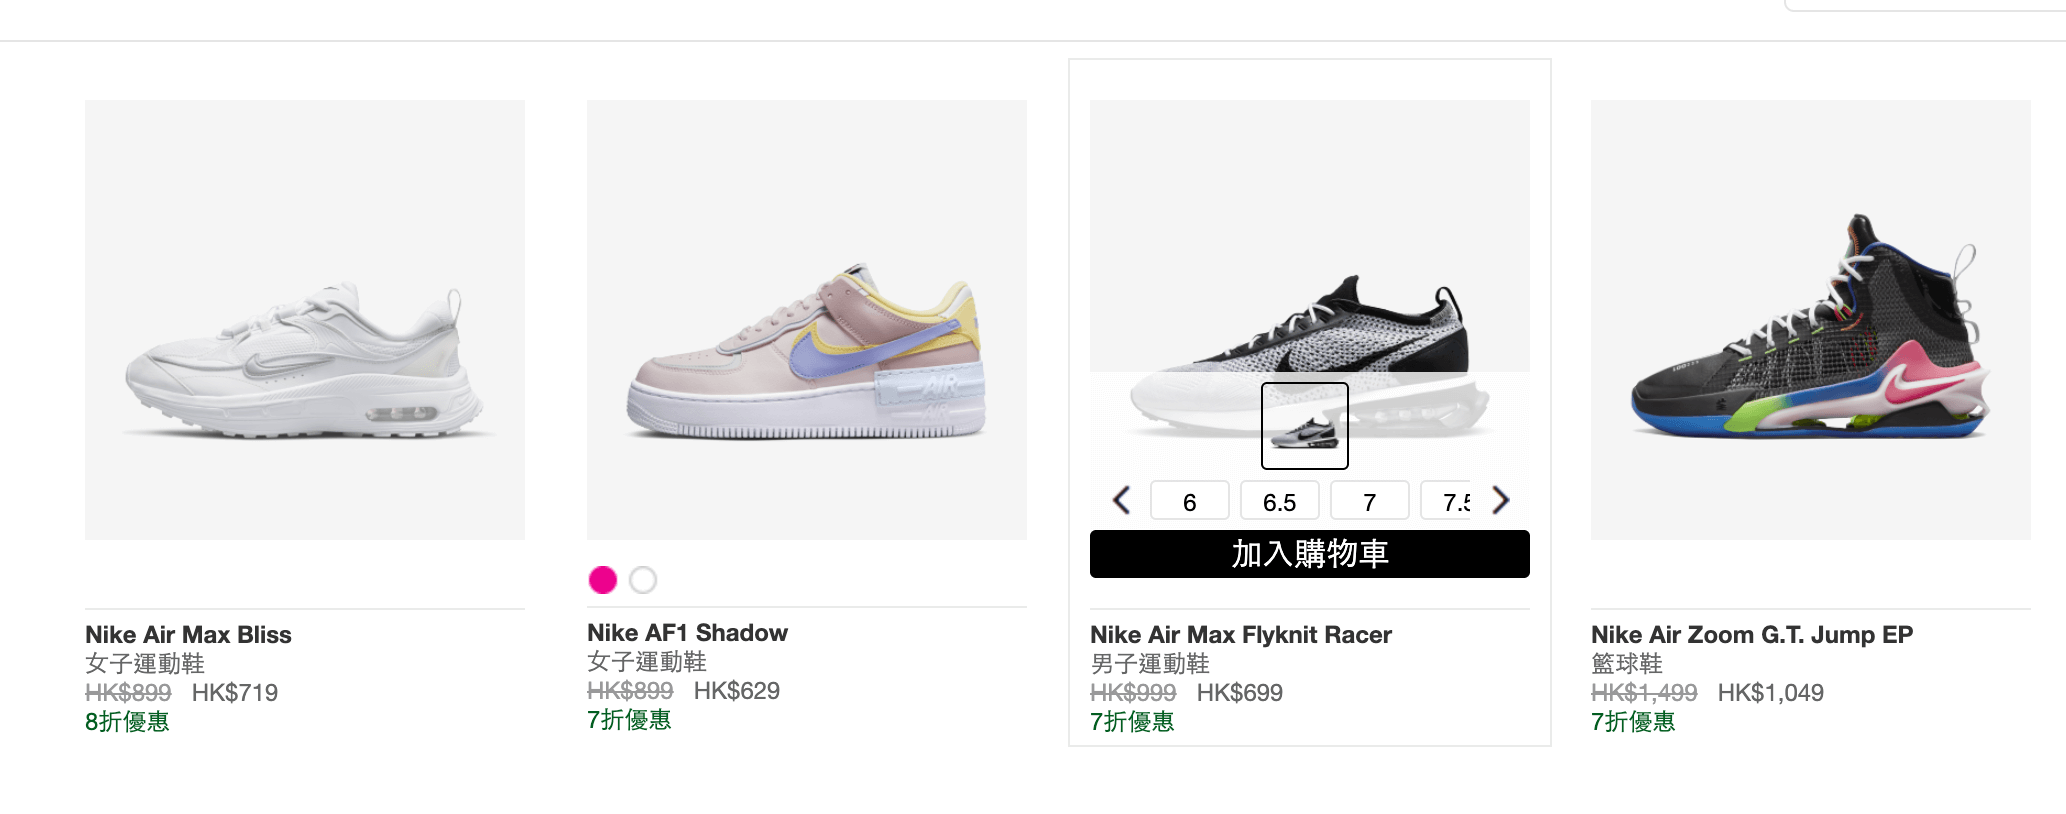 Nike.com Black Friday 額外8折優惠碼